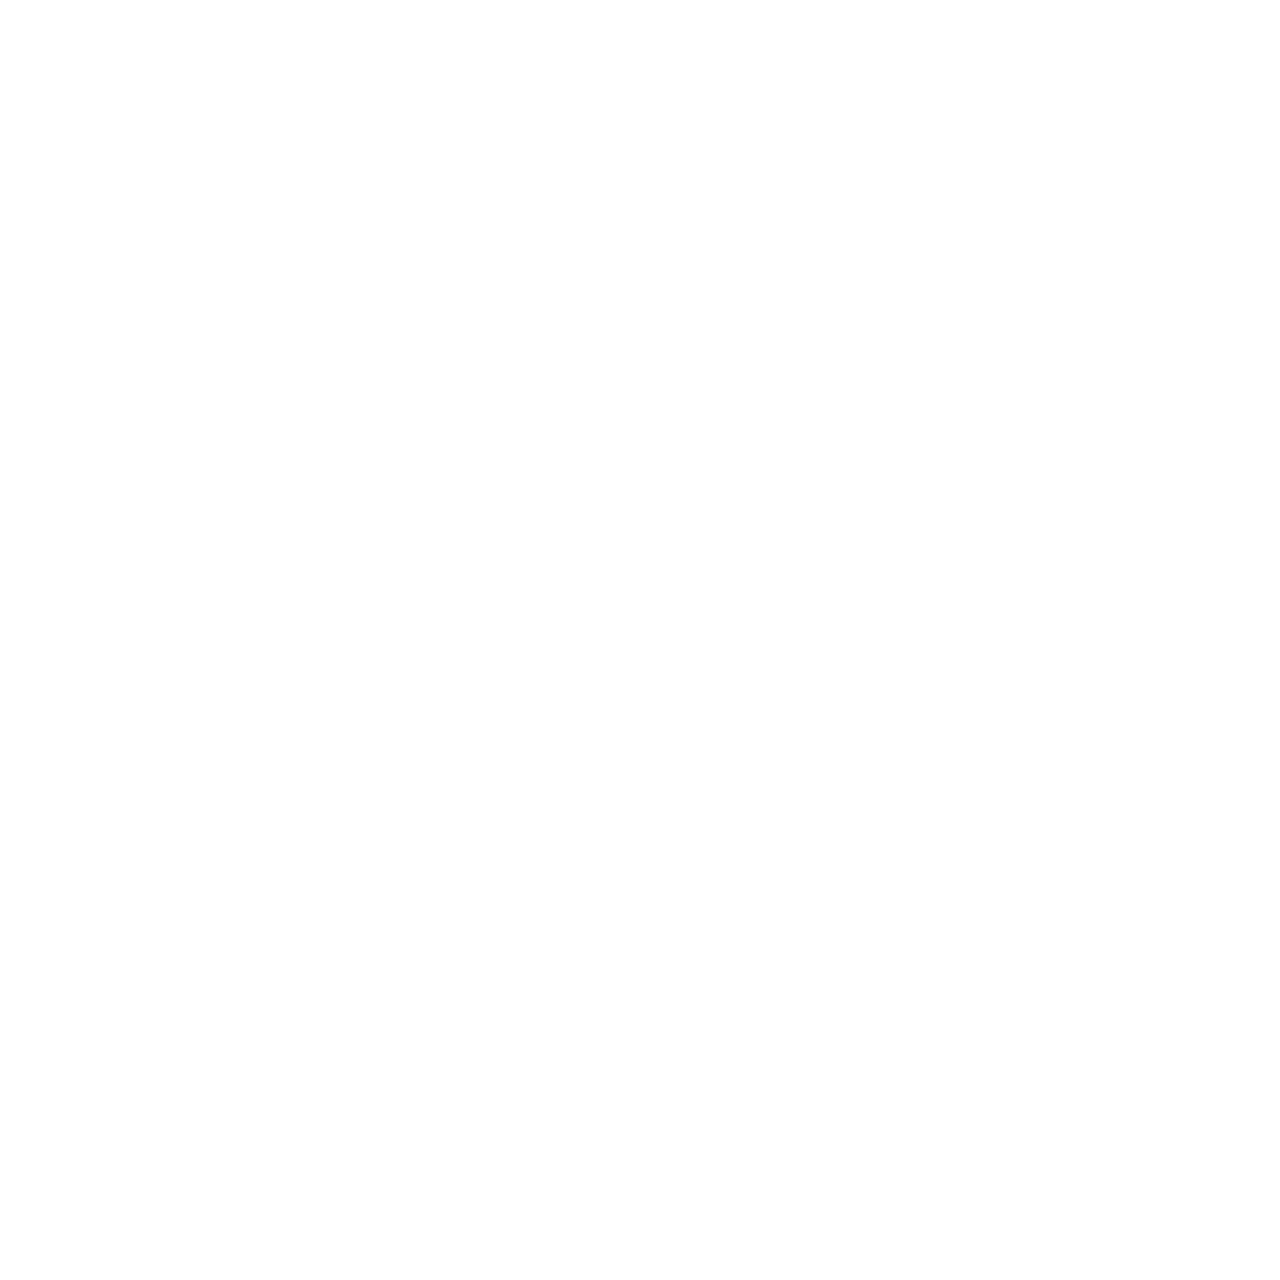 D Fragrance